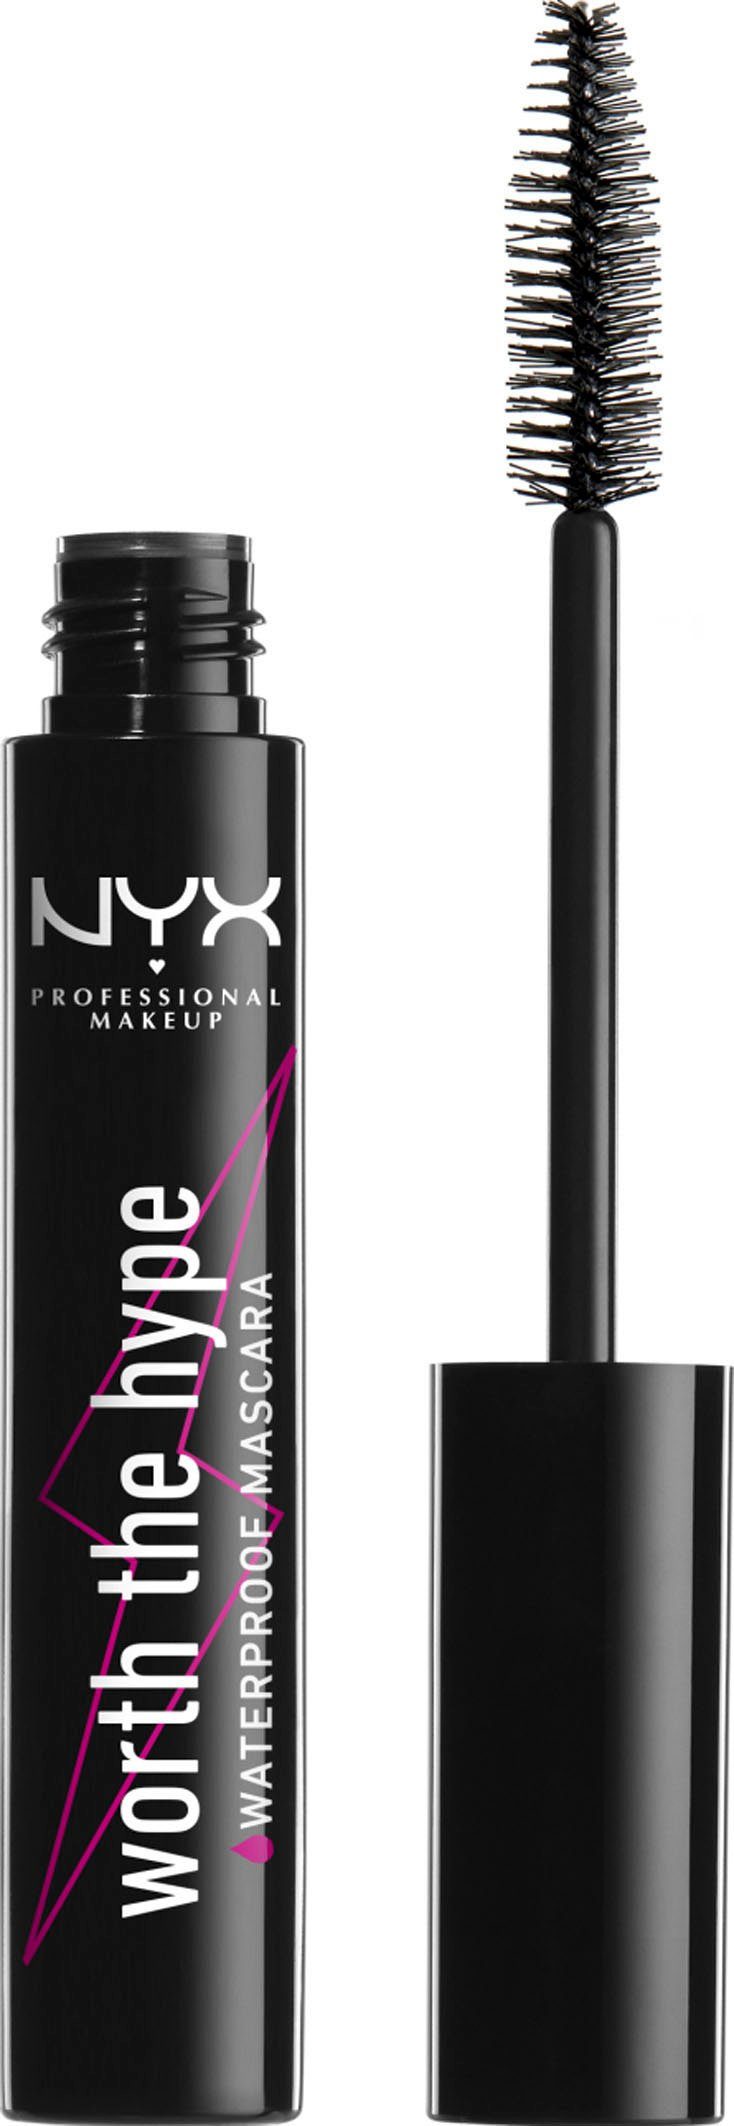 NYX Mascara Professional Makeup Worth The Hype Waterproof Mascara | Mascara